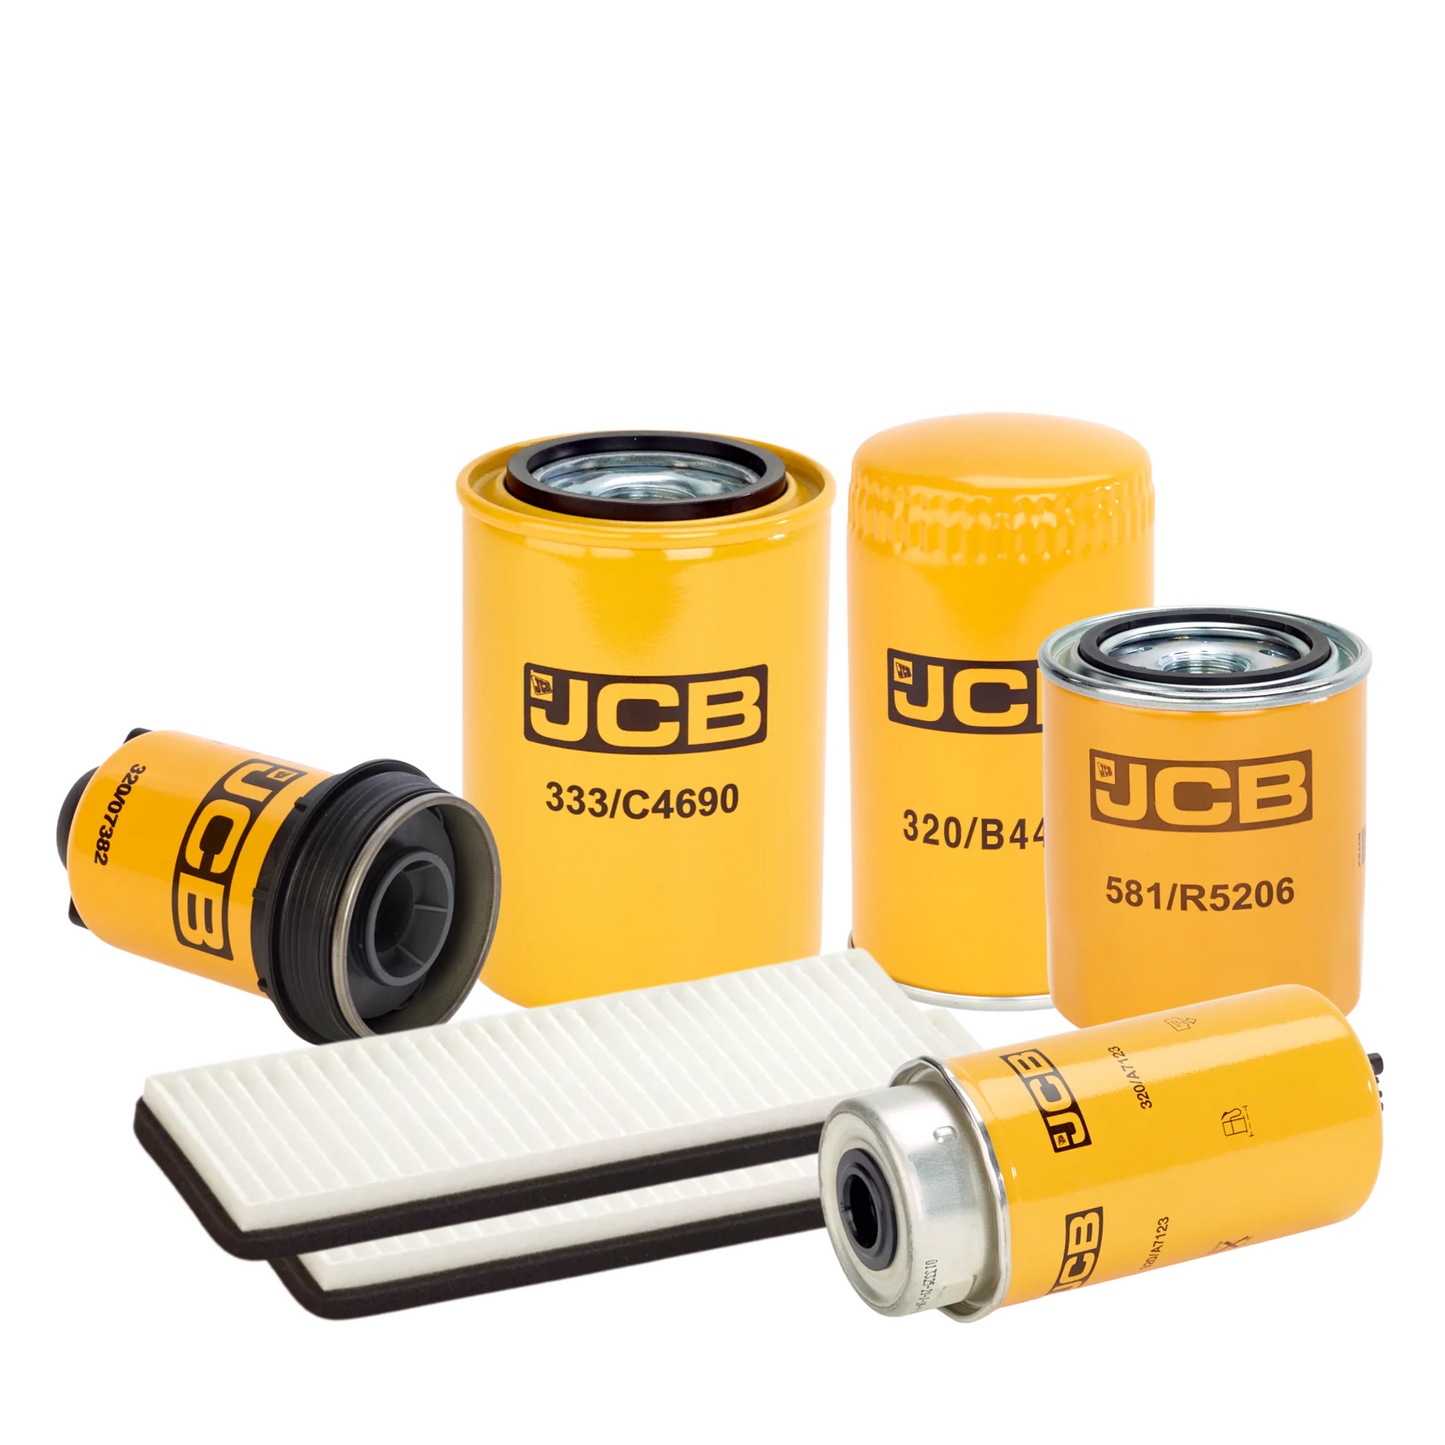 JCB 541-70 7500 Hour Filter Service Kit